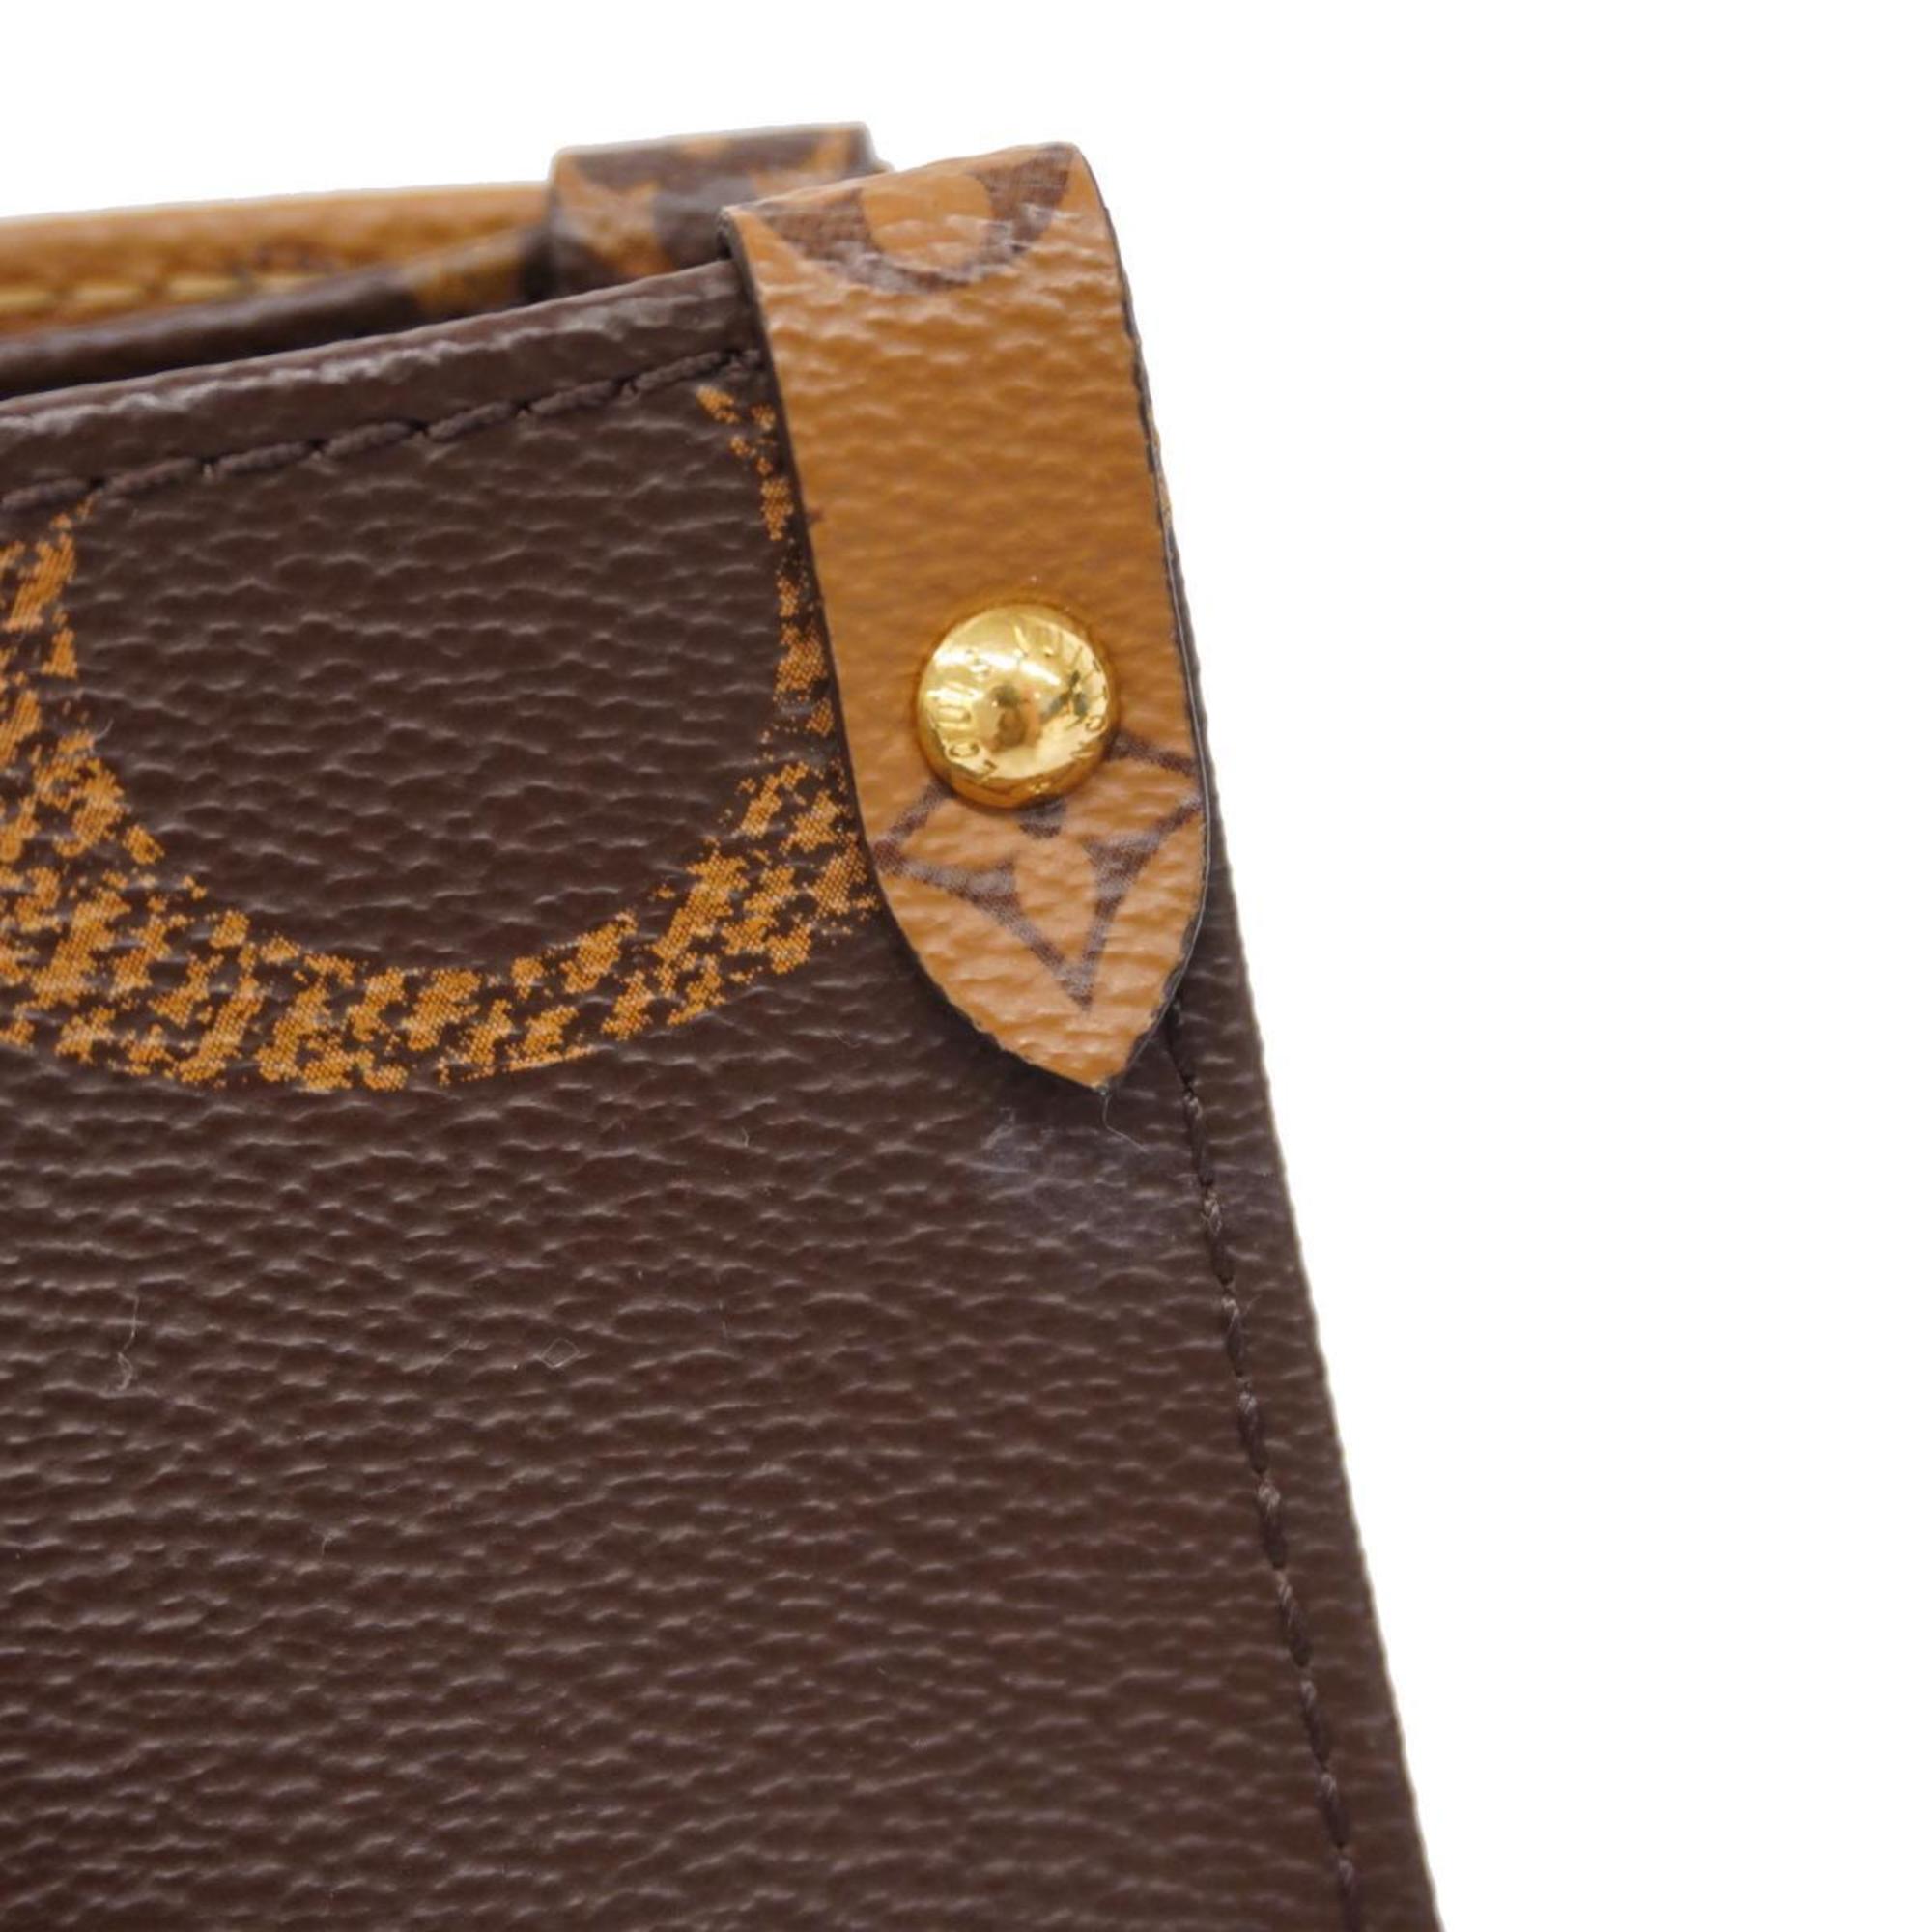 Louis Vuitton Handbag Monogram Giant On The Go MM M45321 Brown Women's